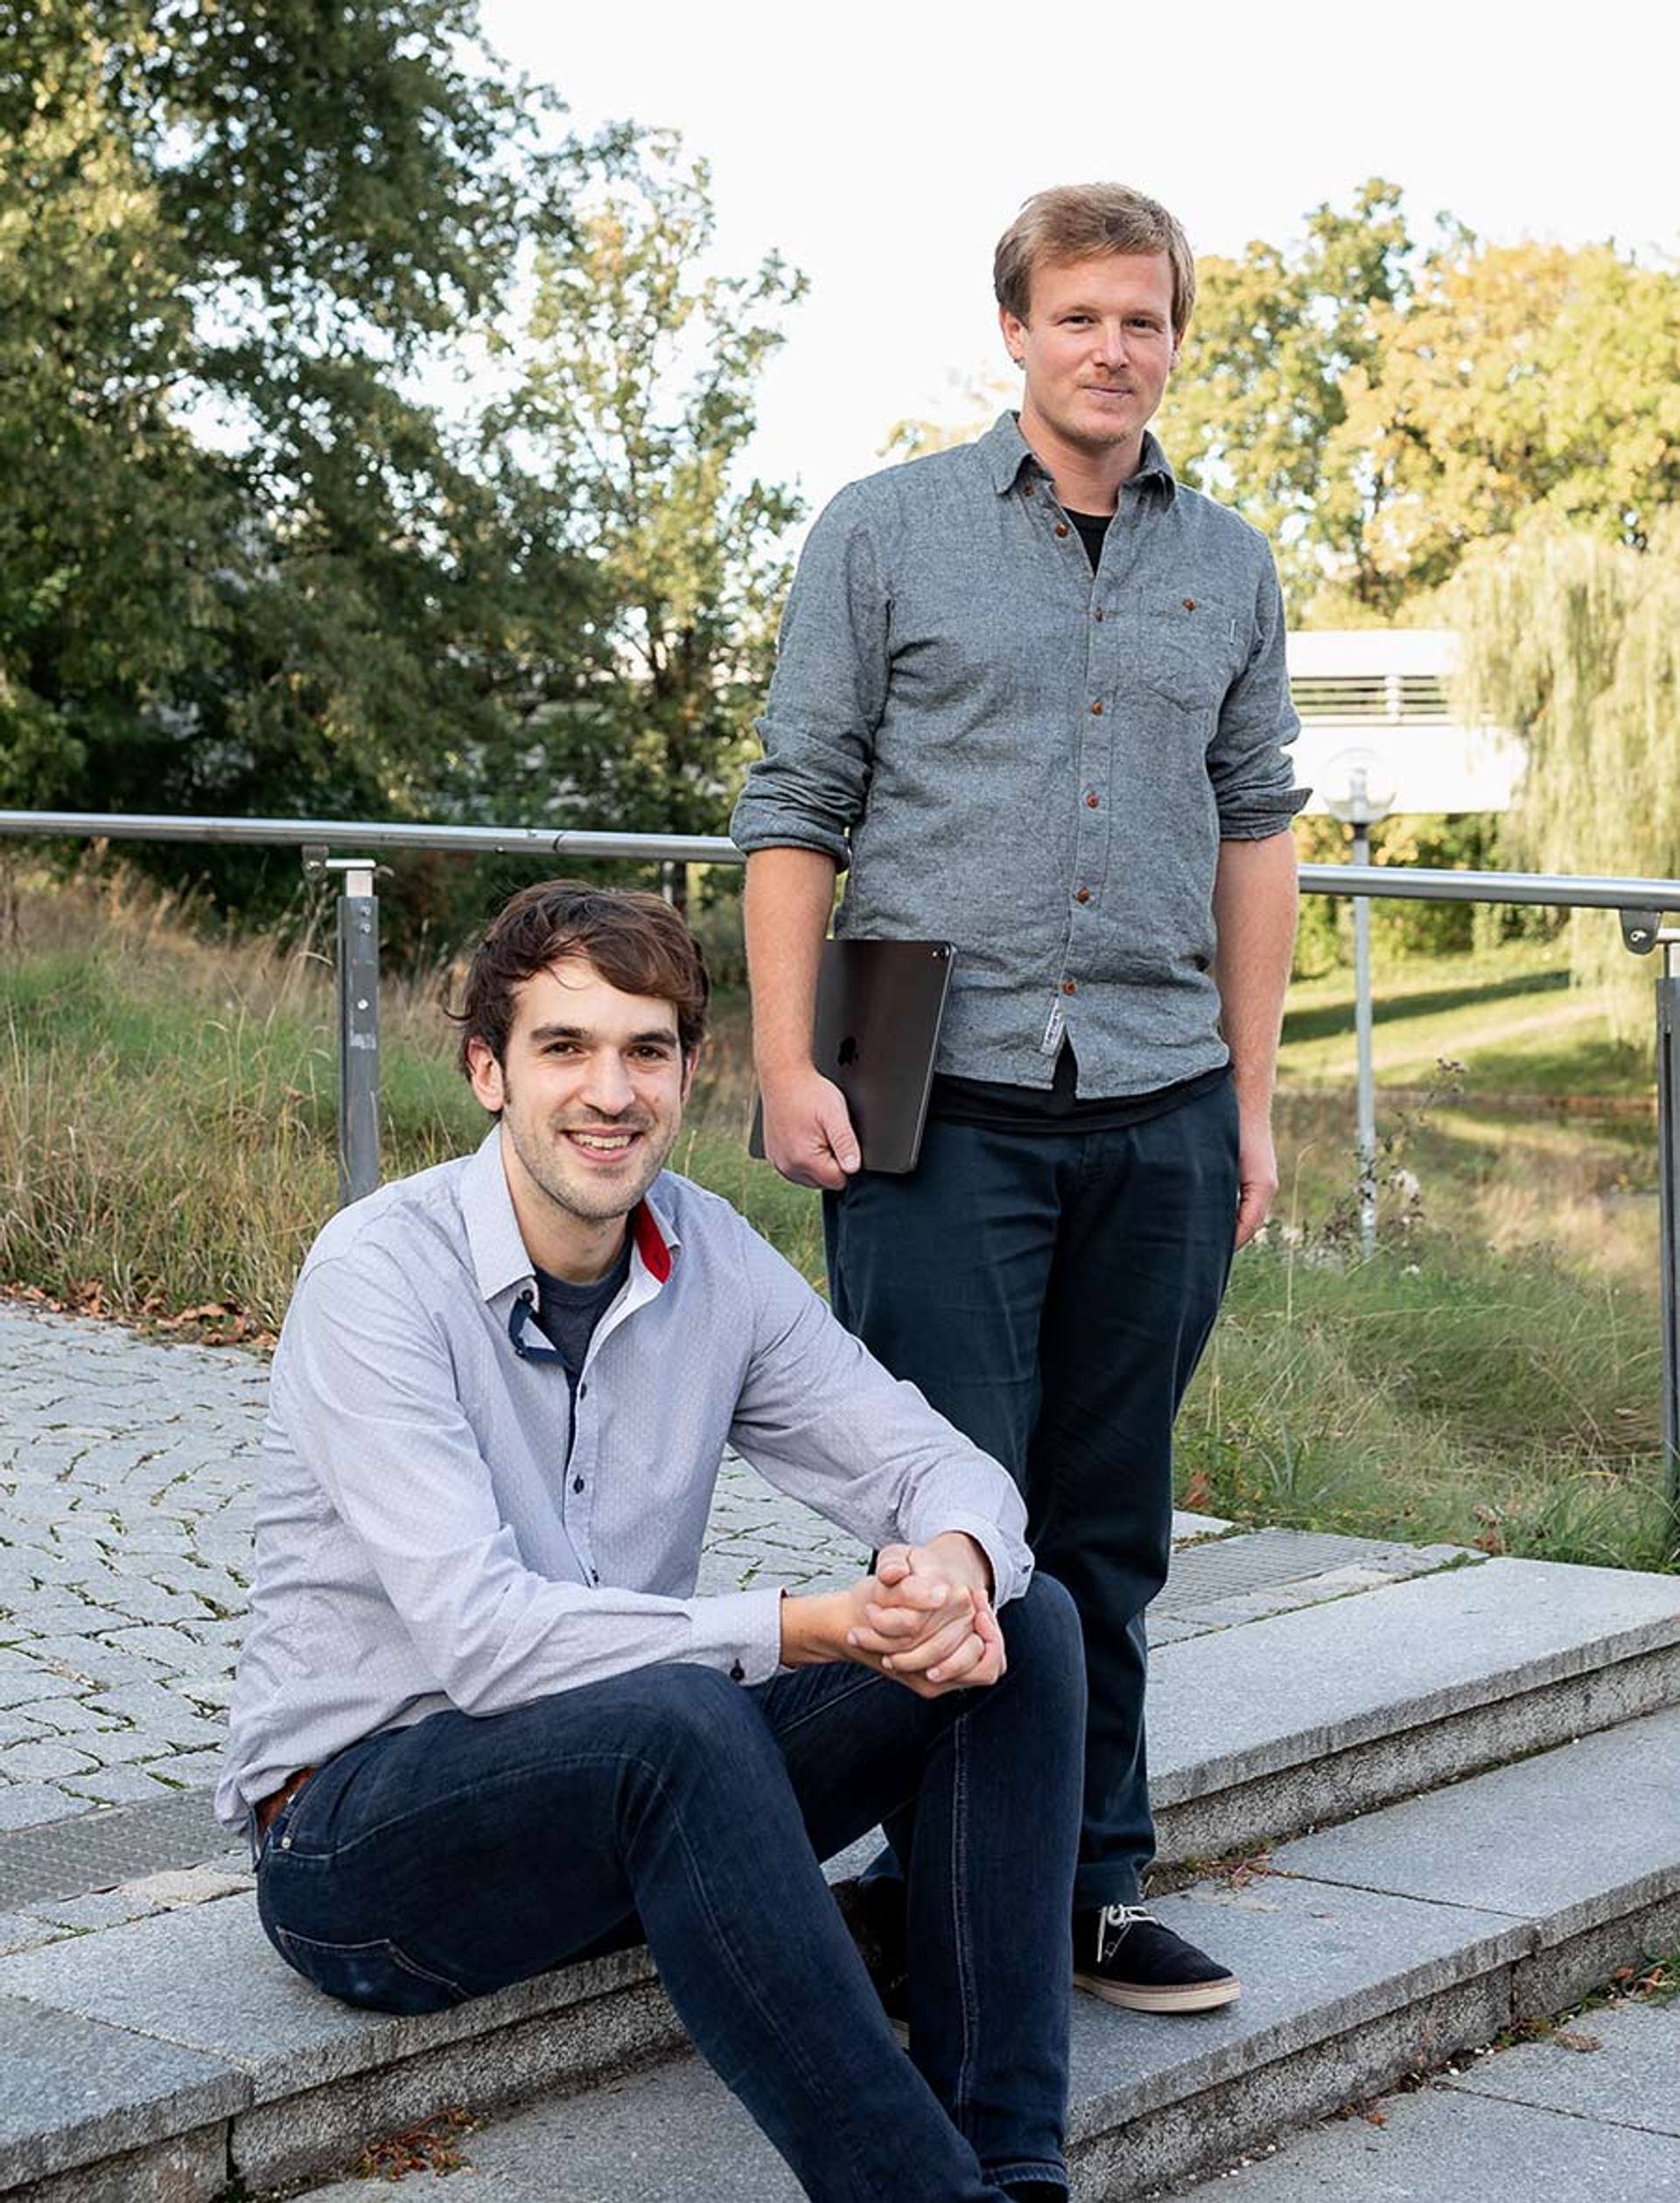 Johannes Ewald and Michael Jaser, two Peerigon Co-founders